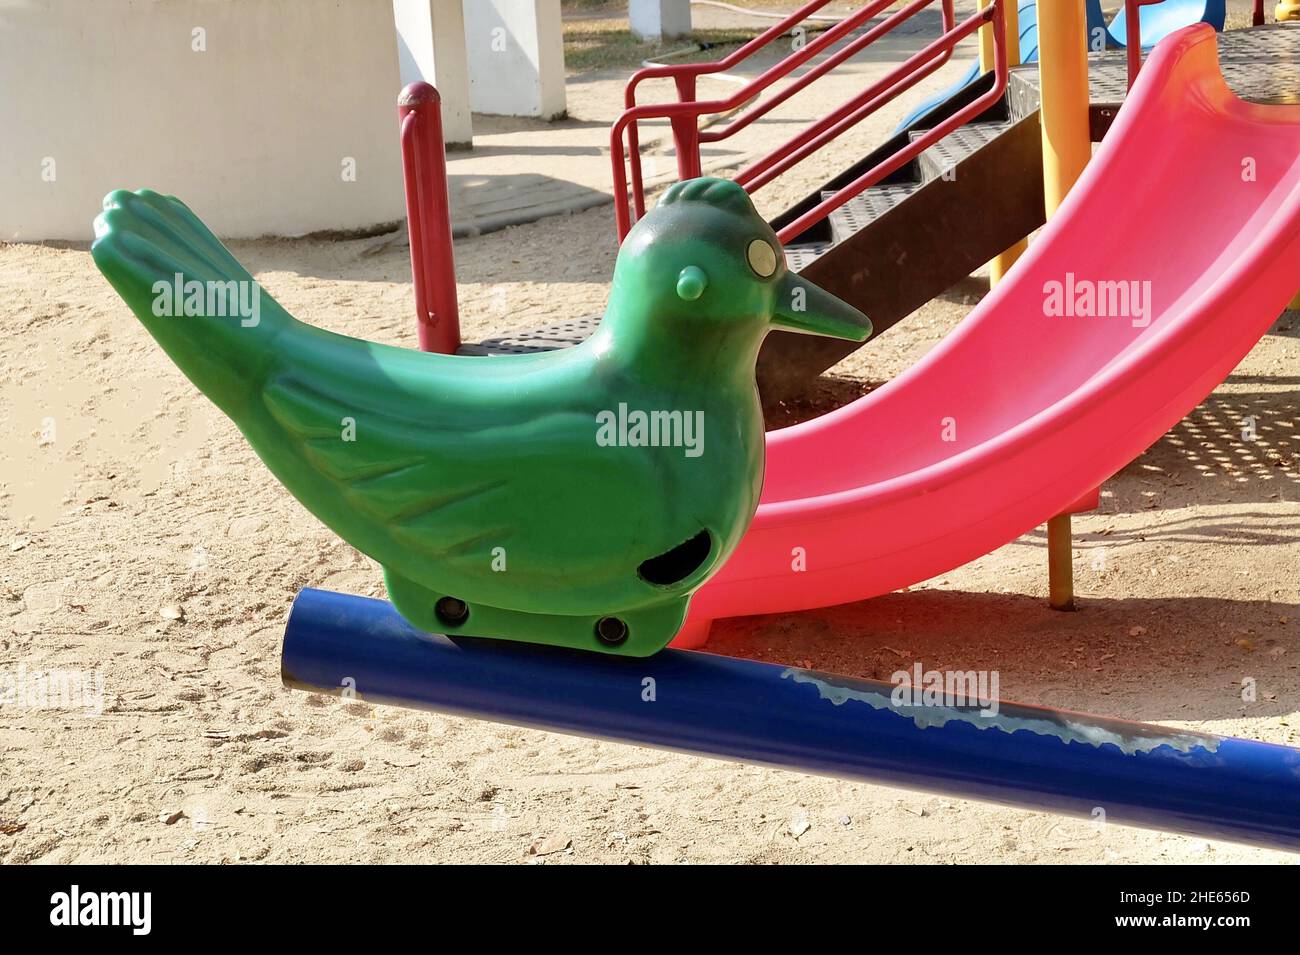 Children Playground, Plastic Bird Seesaw, Teeter Totter or Teeterboard in Outdoor Park. Stock Photo